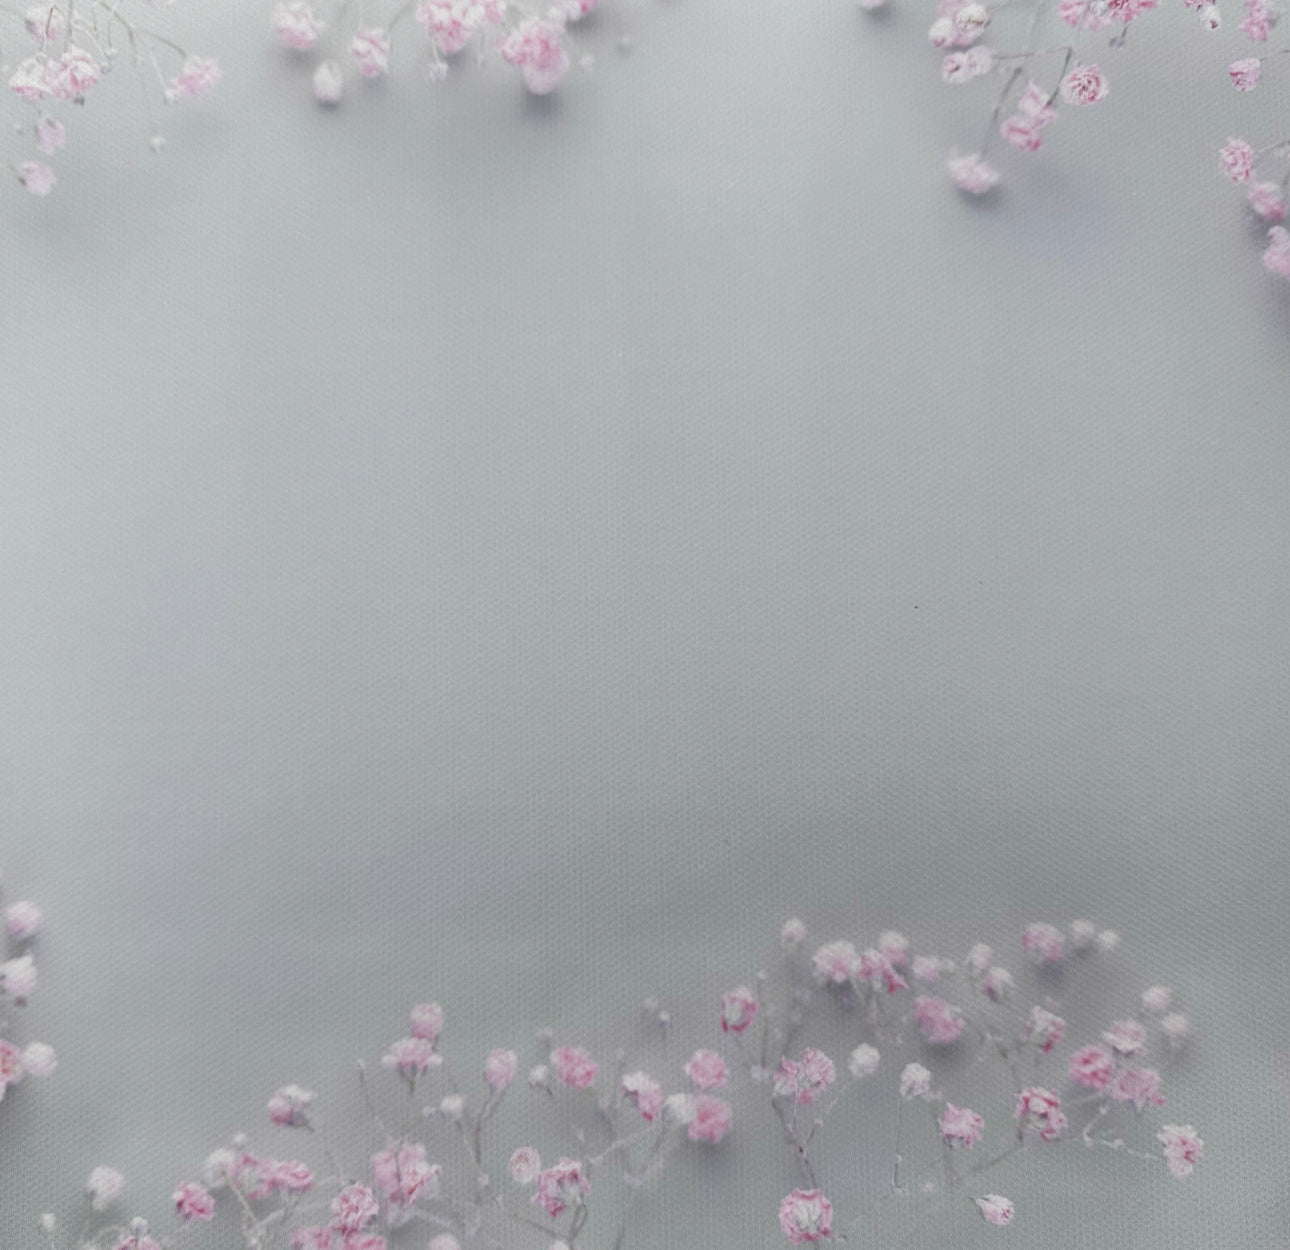 Subtle pink blossoms Canvas Photography Background